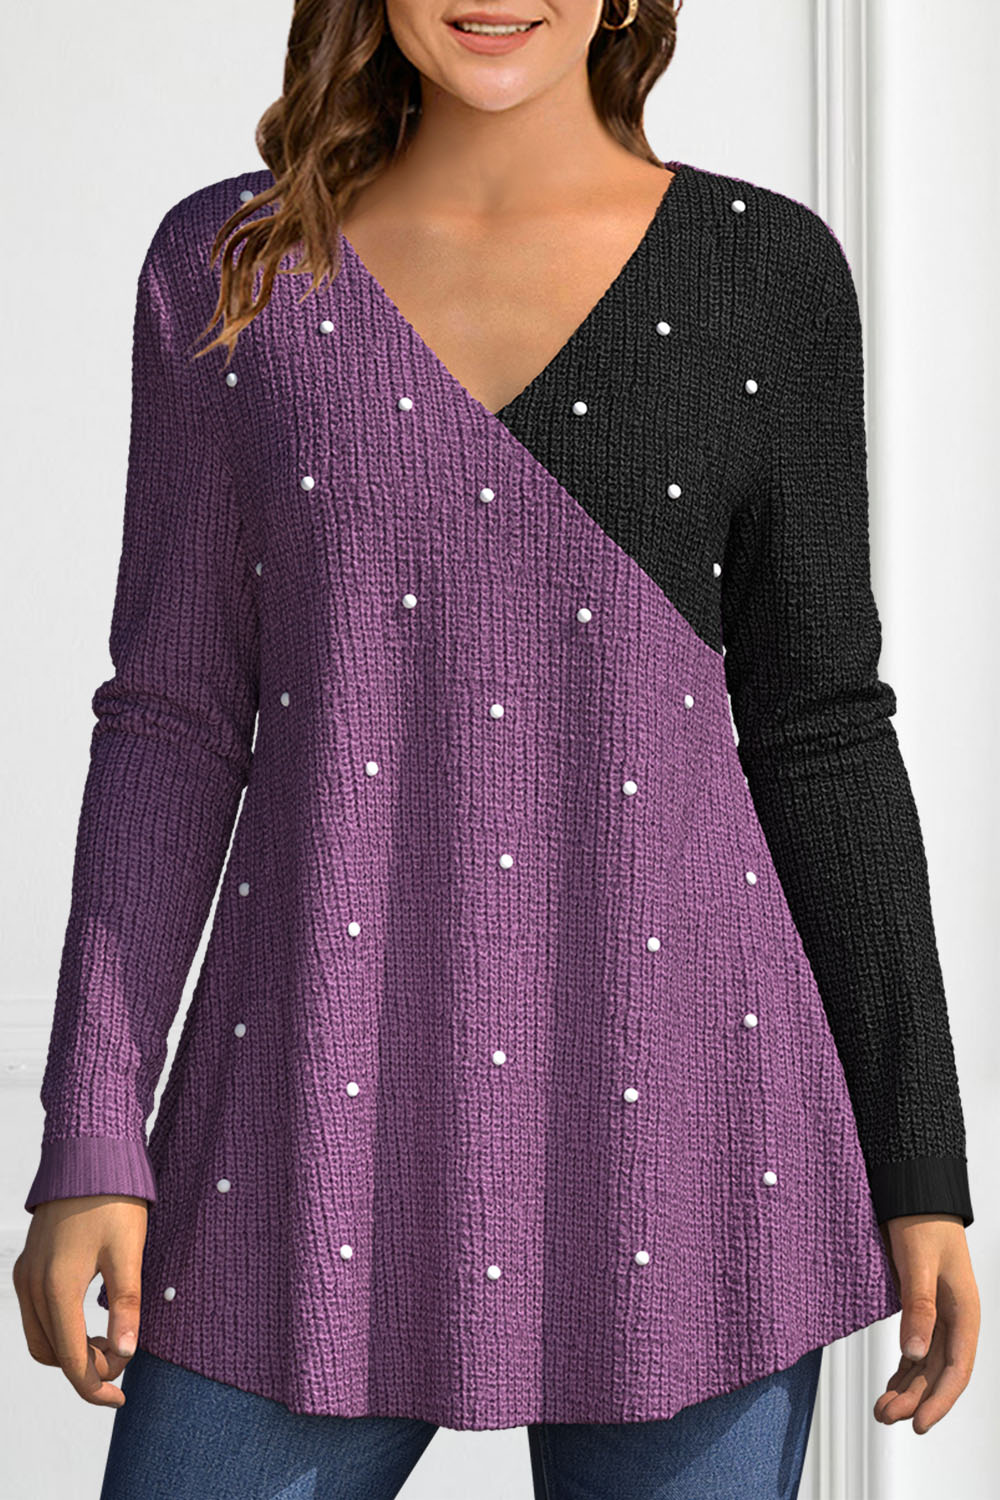 Flycurvy Plus Size Casual Purple Contrast Color Patchwork Pearls Decor Sweater